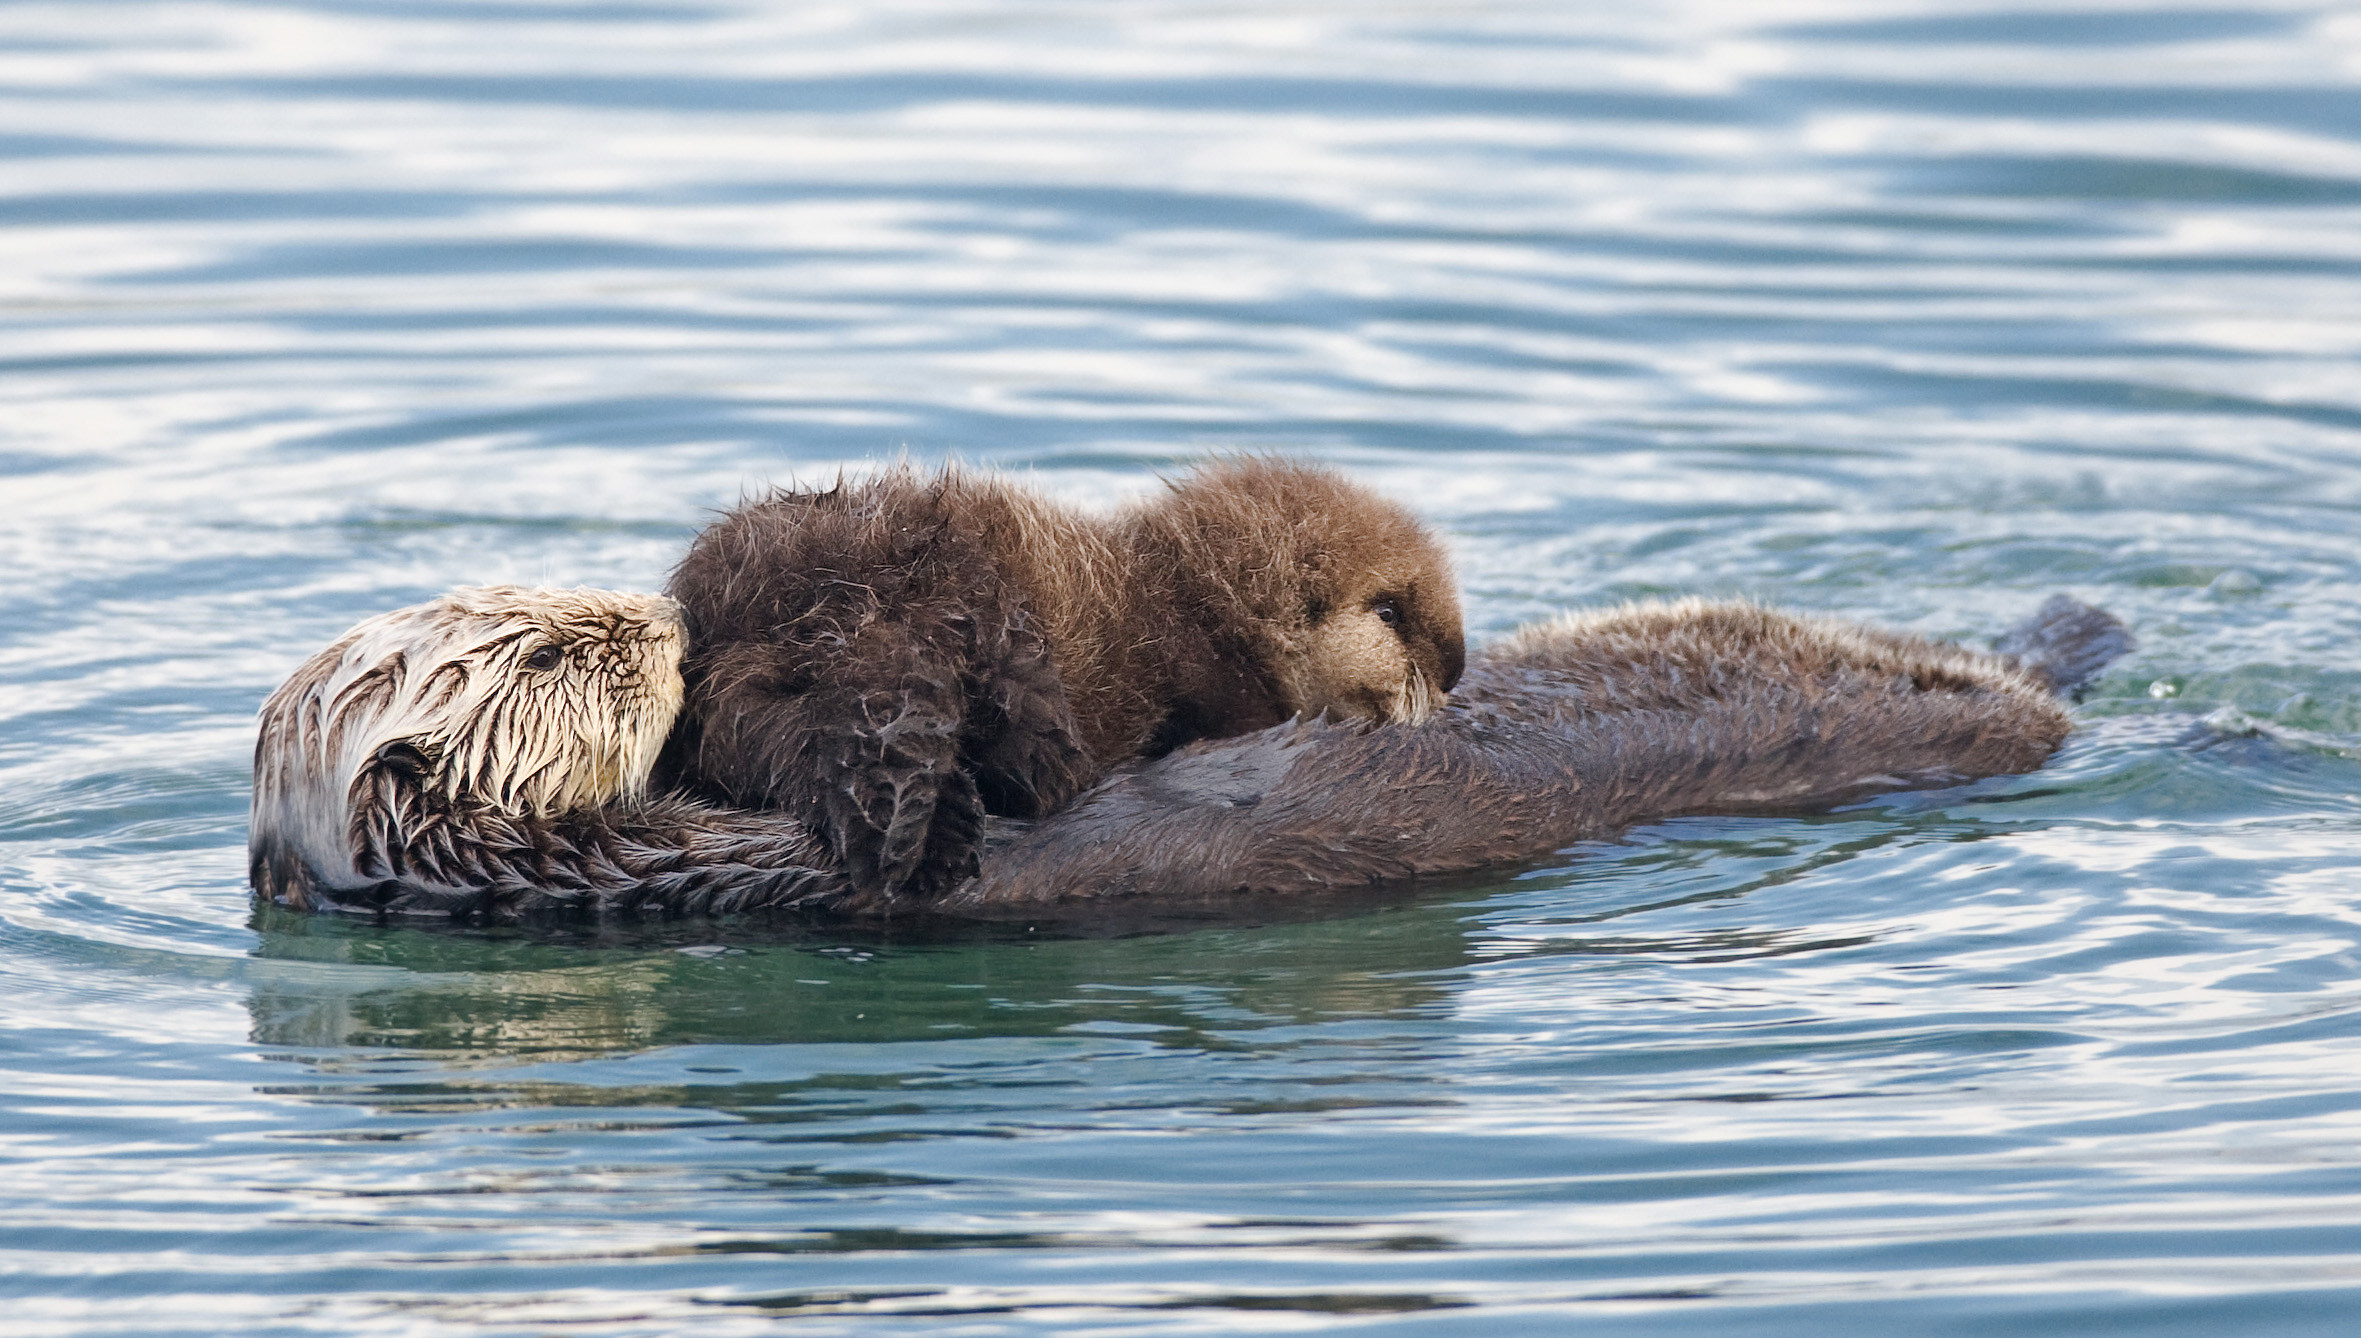 File:Sea otter nursing02.jpg - Wikimedia Commons